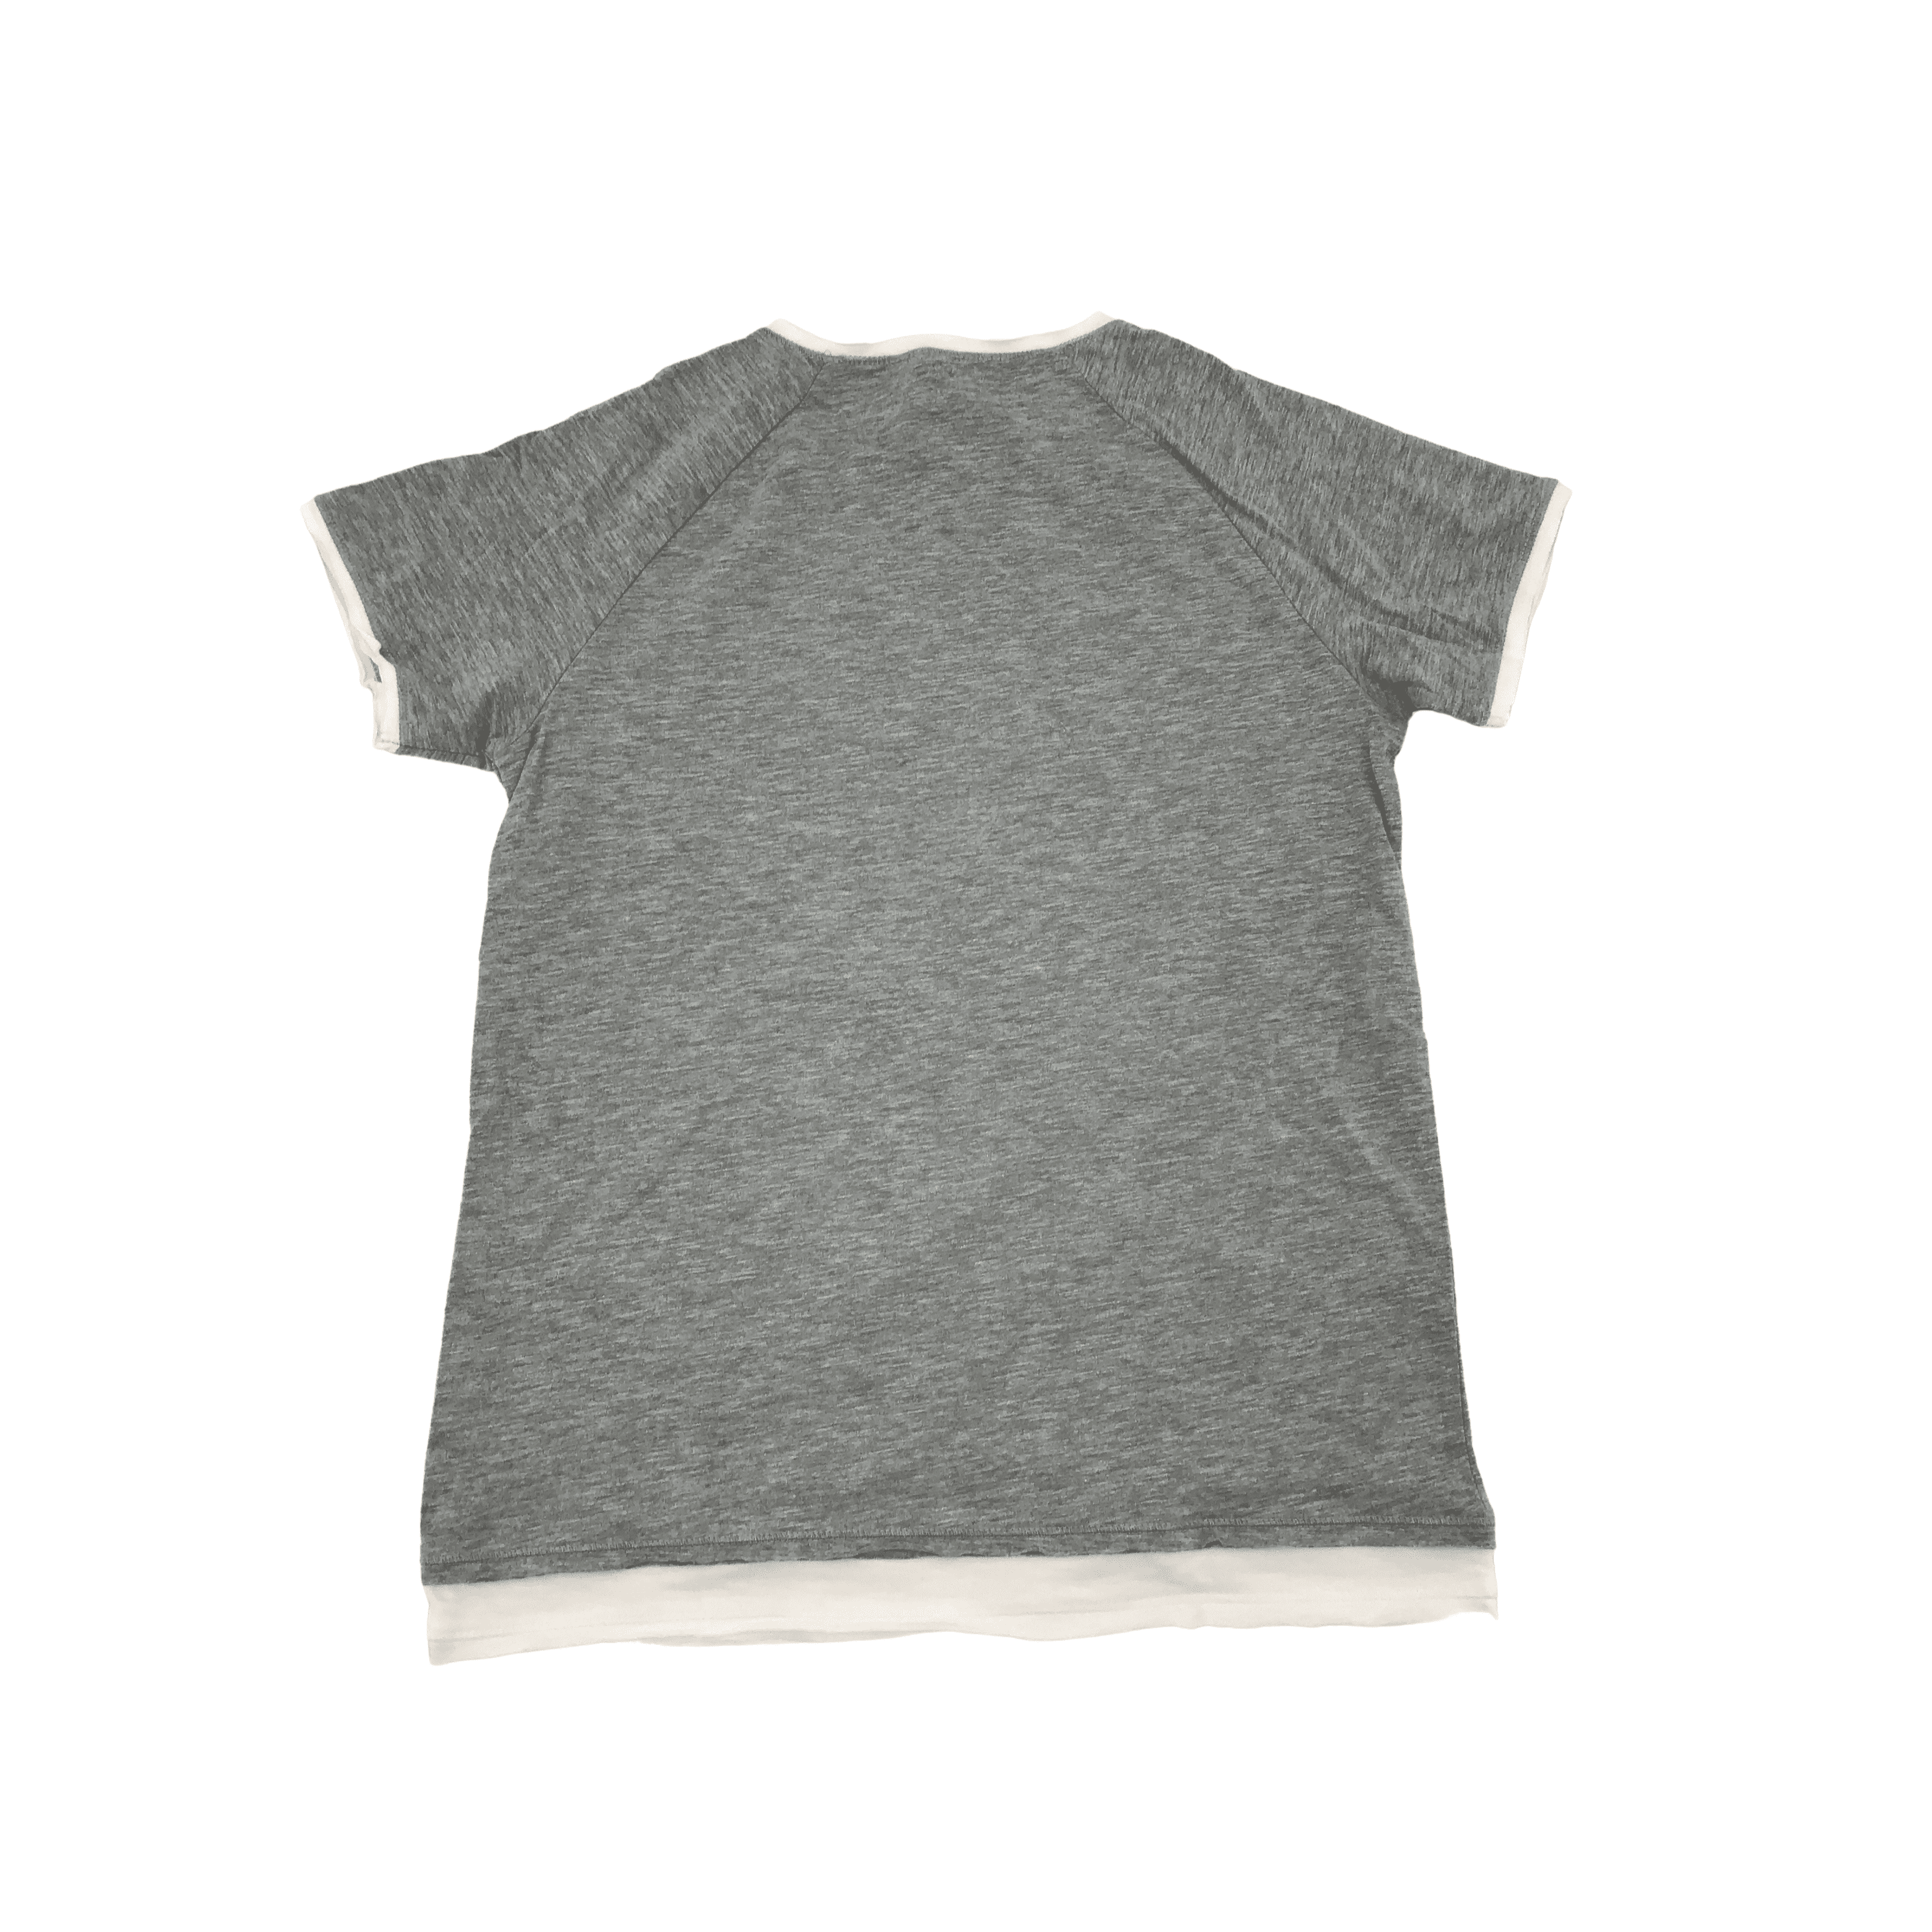 Manguun Children's T-Shirt / Light Grey / Kid's Summer Clothes / Various Sizes